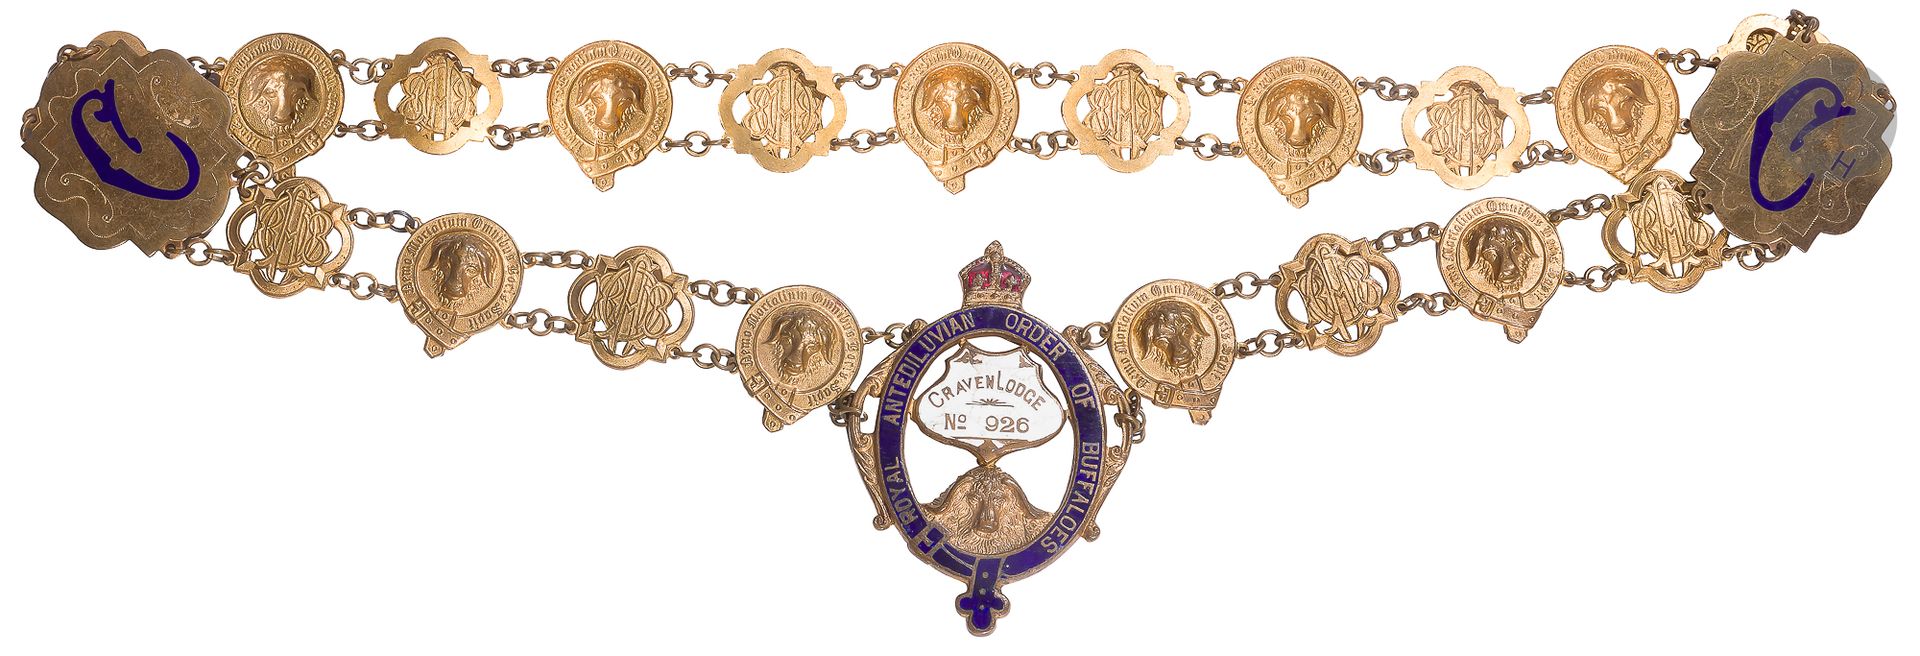 Null "Royal Antediluvian Order of Buffaloes"
Gran collar de fraternidad decorado&hellip;